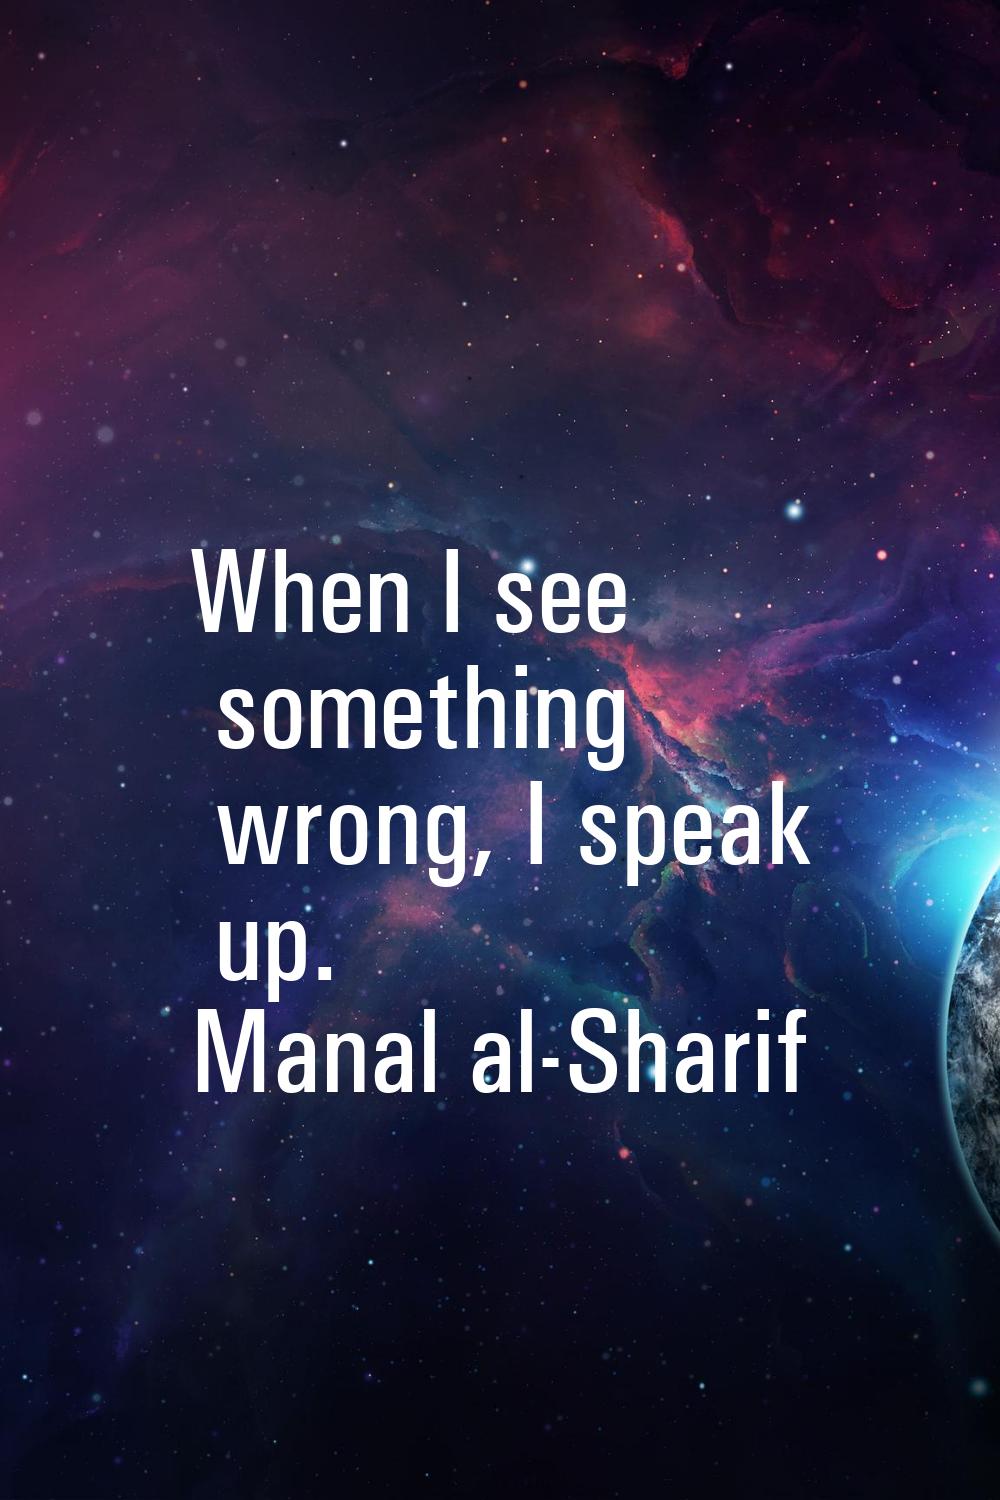 When I see something wrong, I speak up.